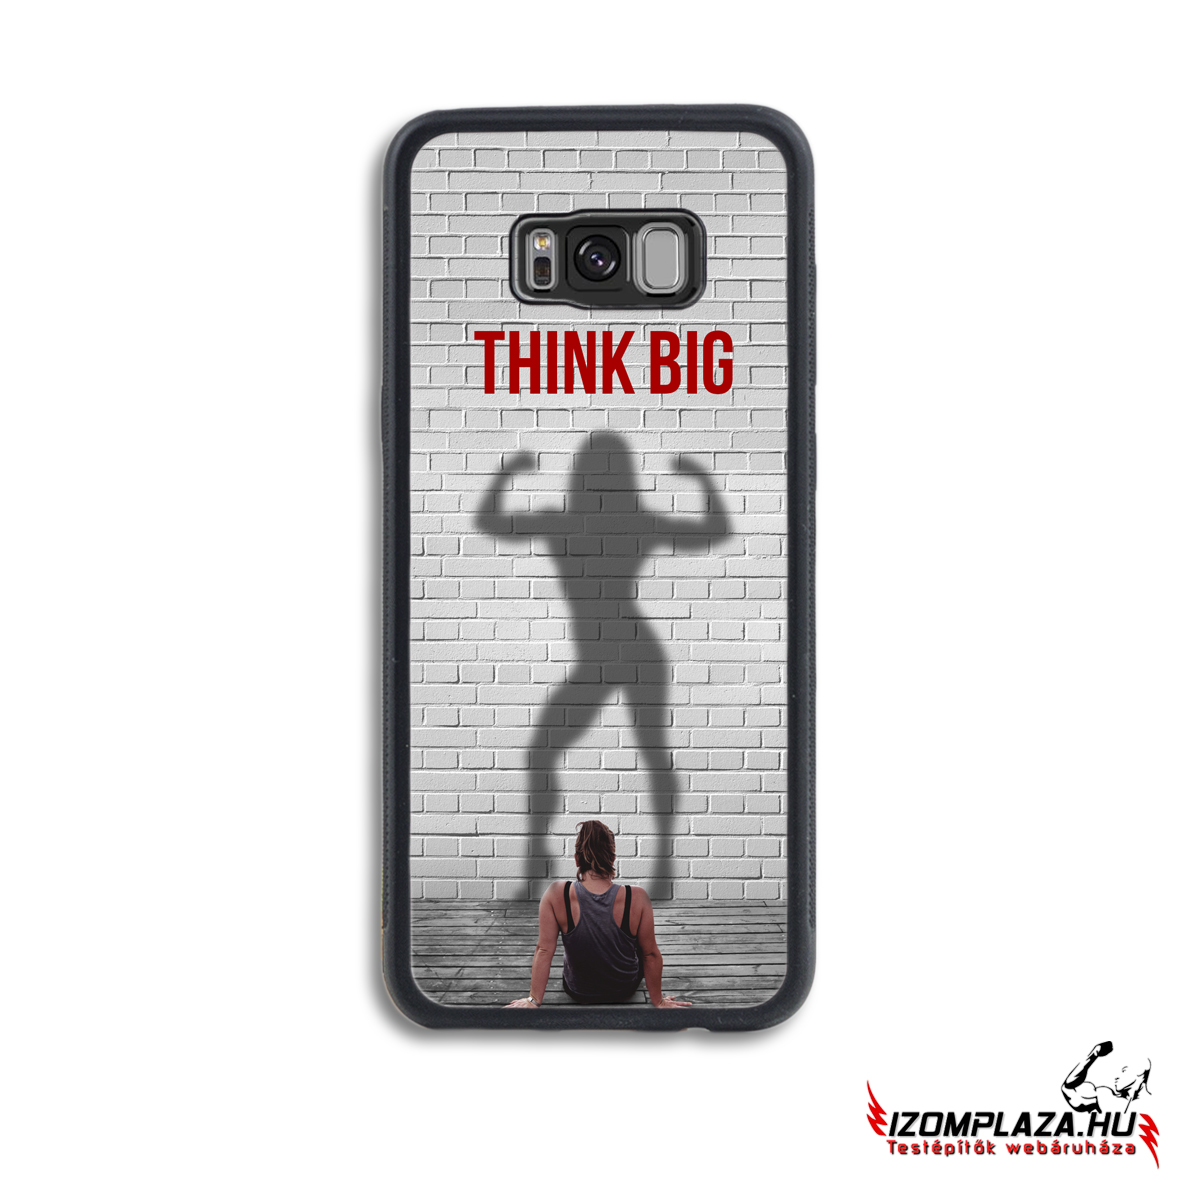 Think big /woman/- Samsung telefontok